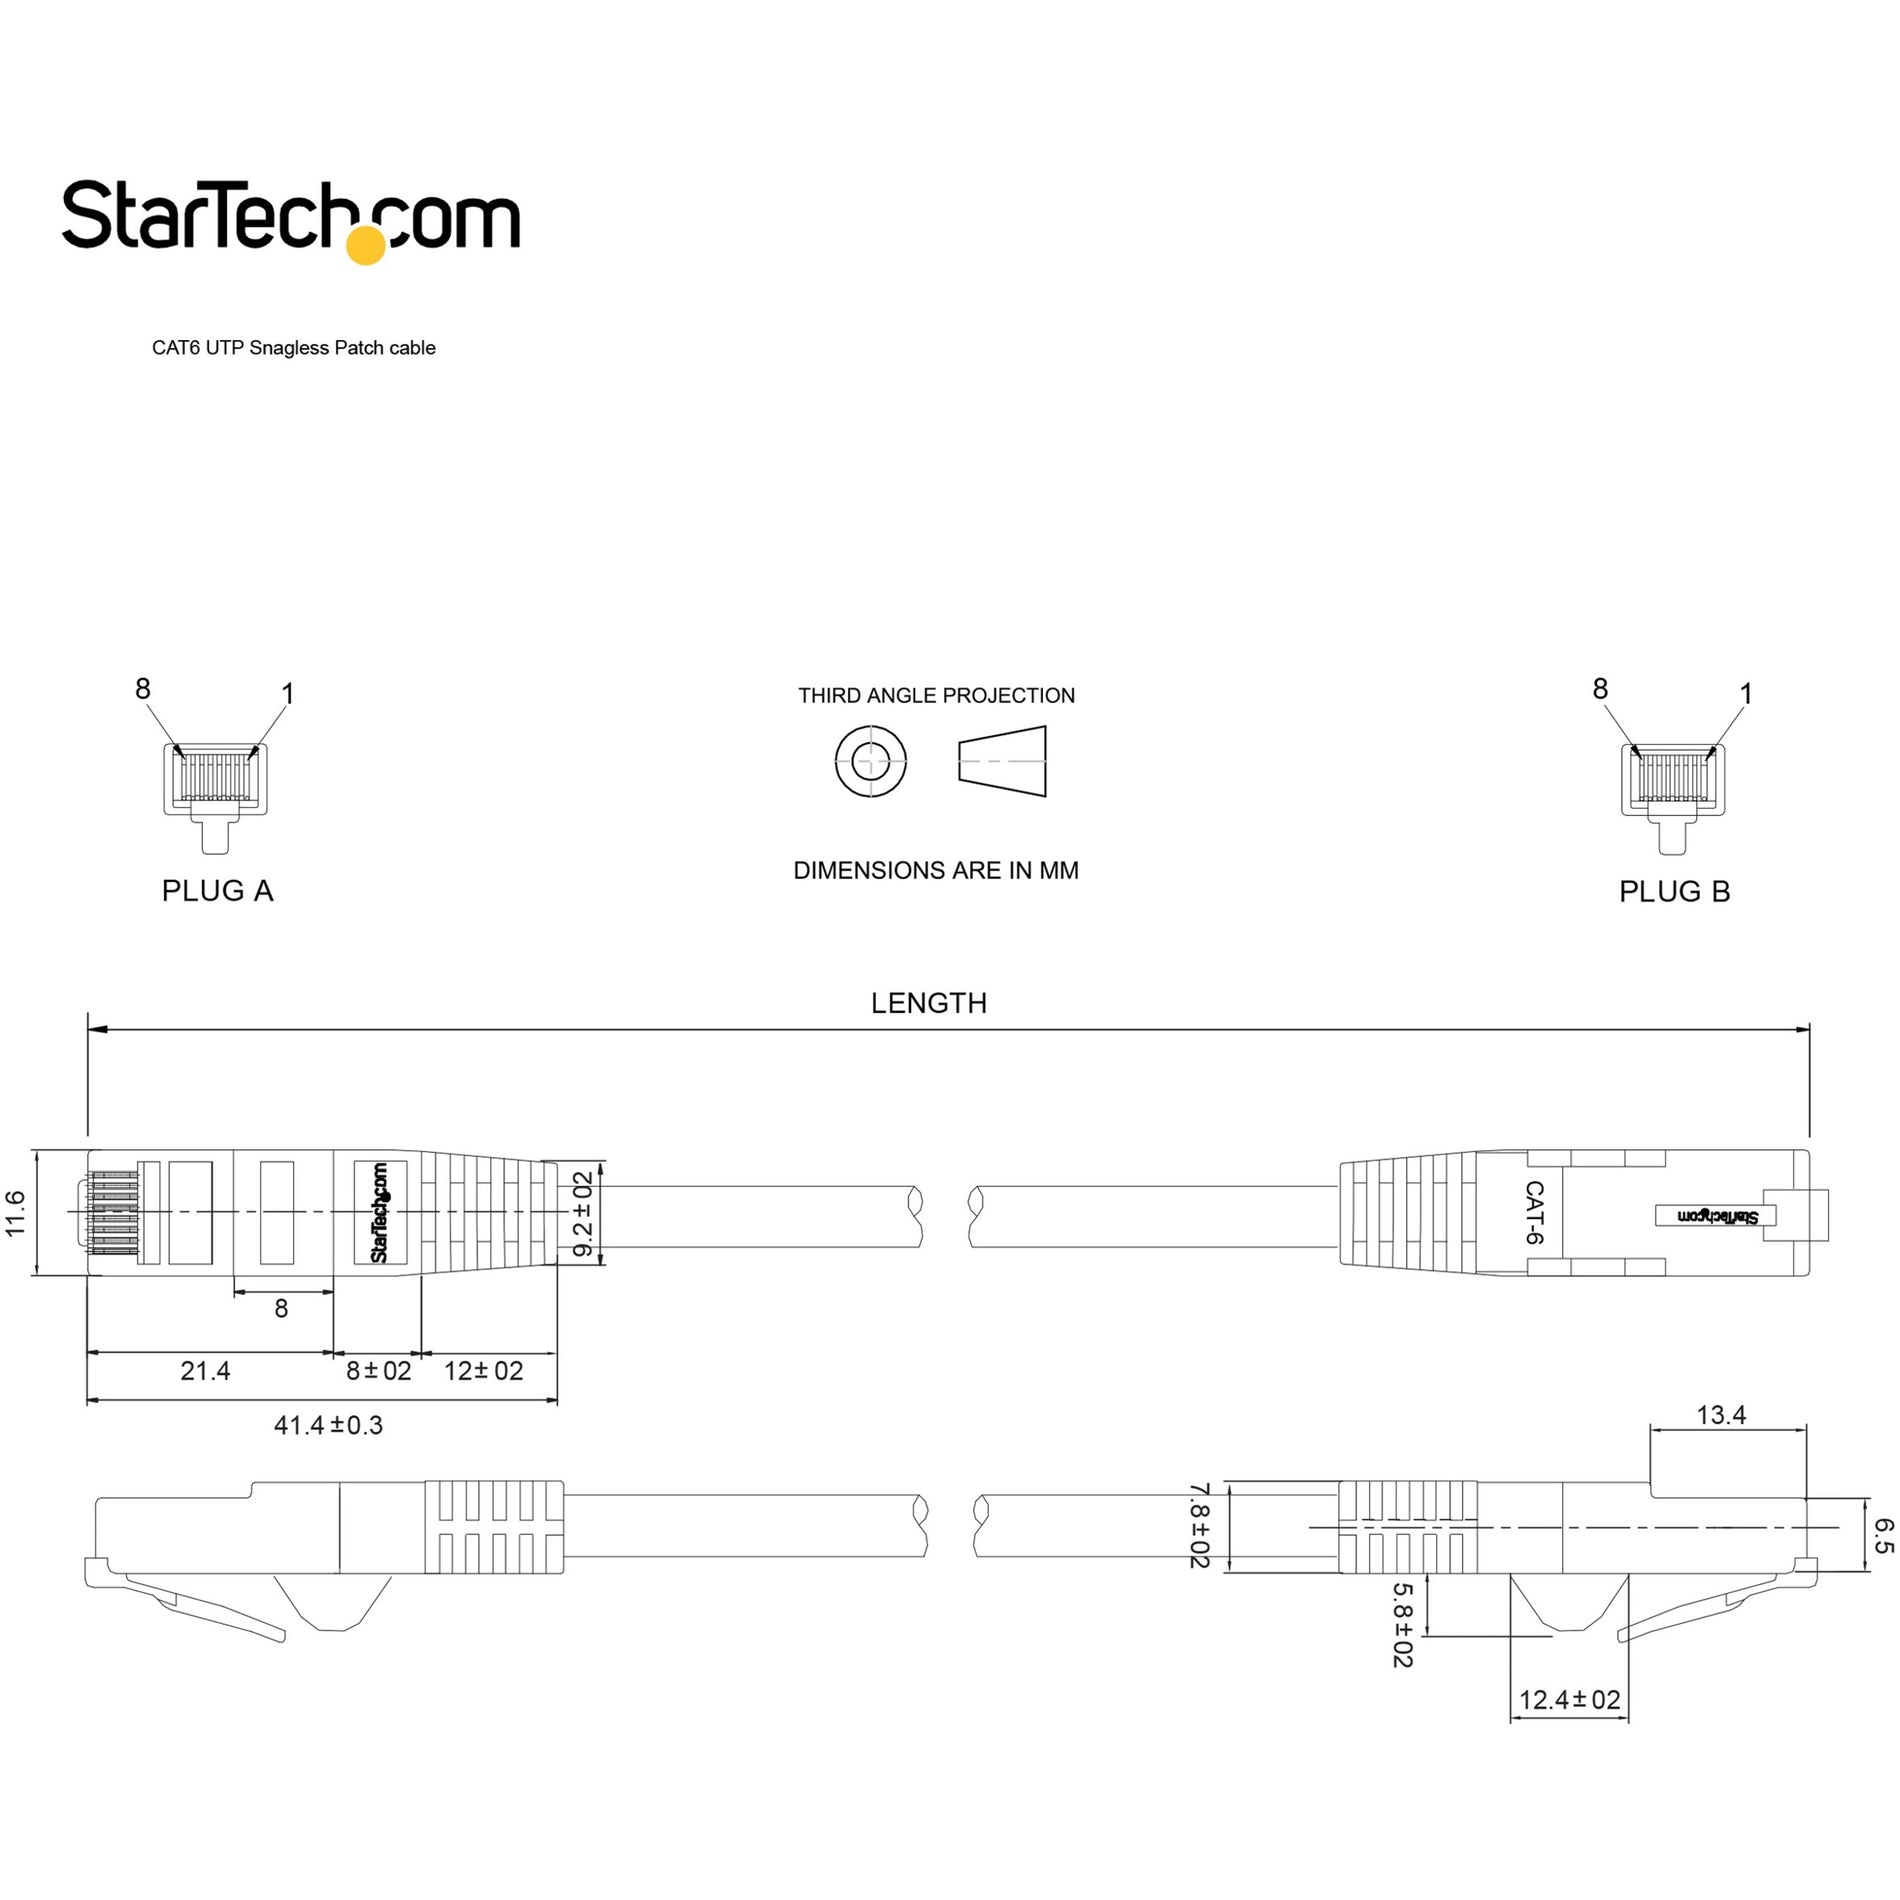 StarTech.com N6PATCH100BK 100 قدم كبل باتش Cat6 UTP أسود غير قابل للحصول، PoE، معدل نقل بيانات 10 جيجا بت في الثانية